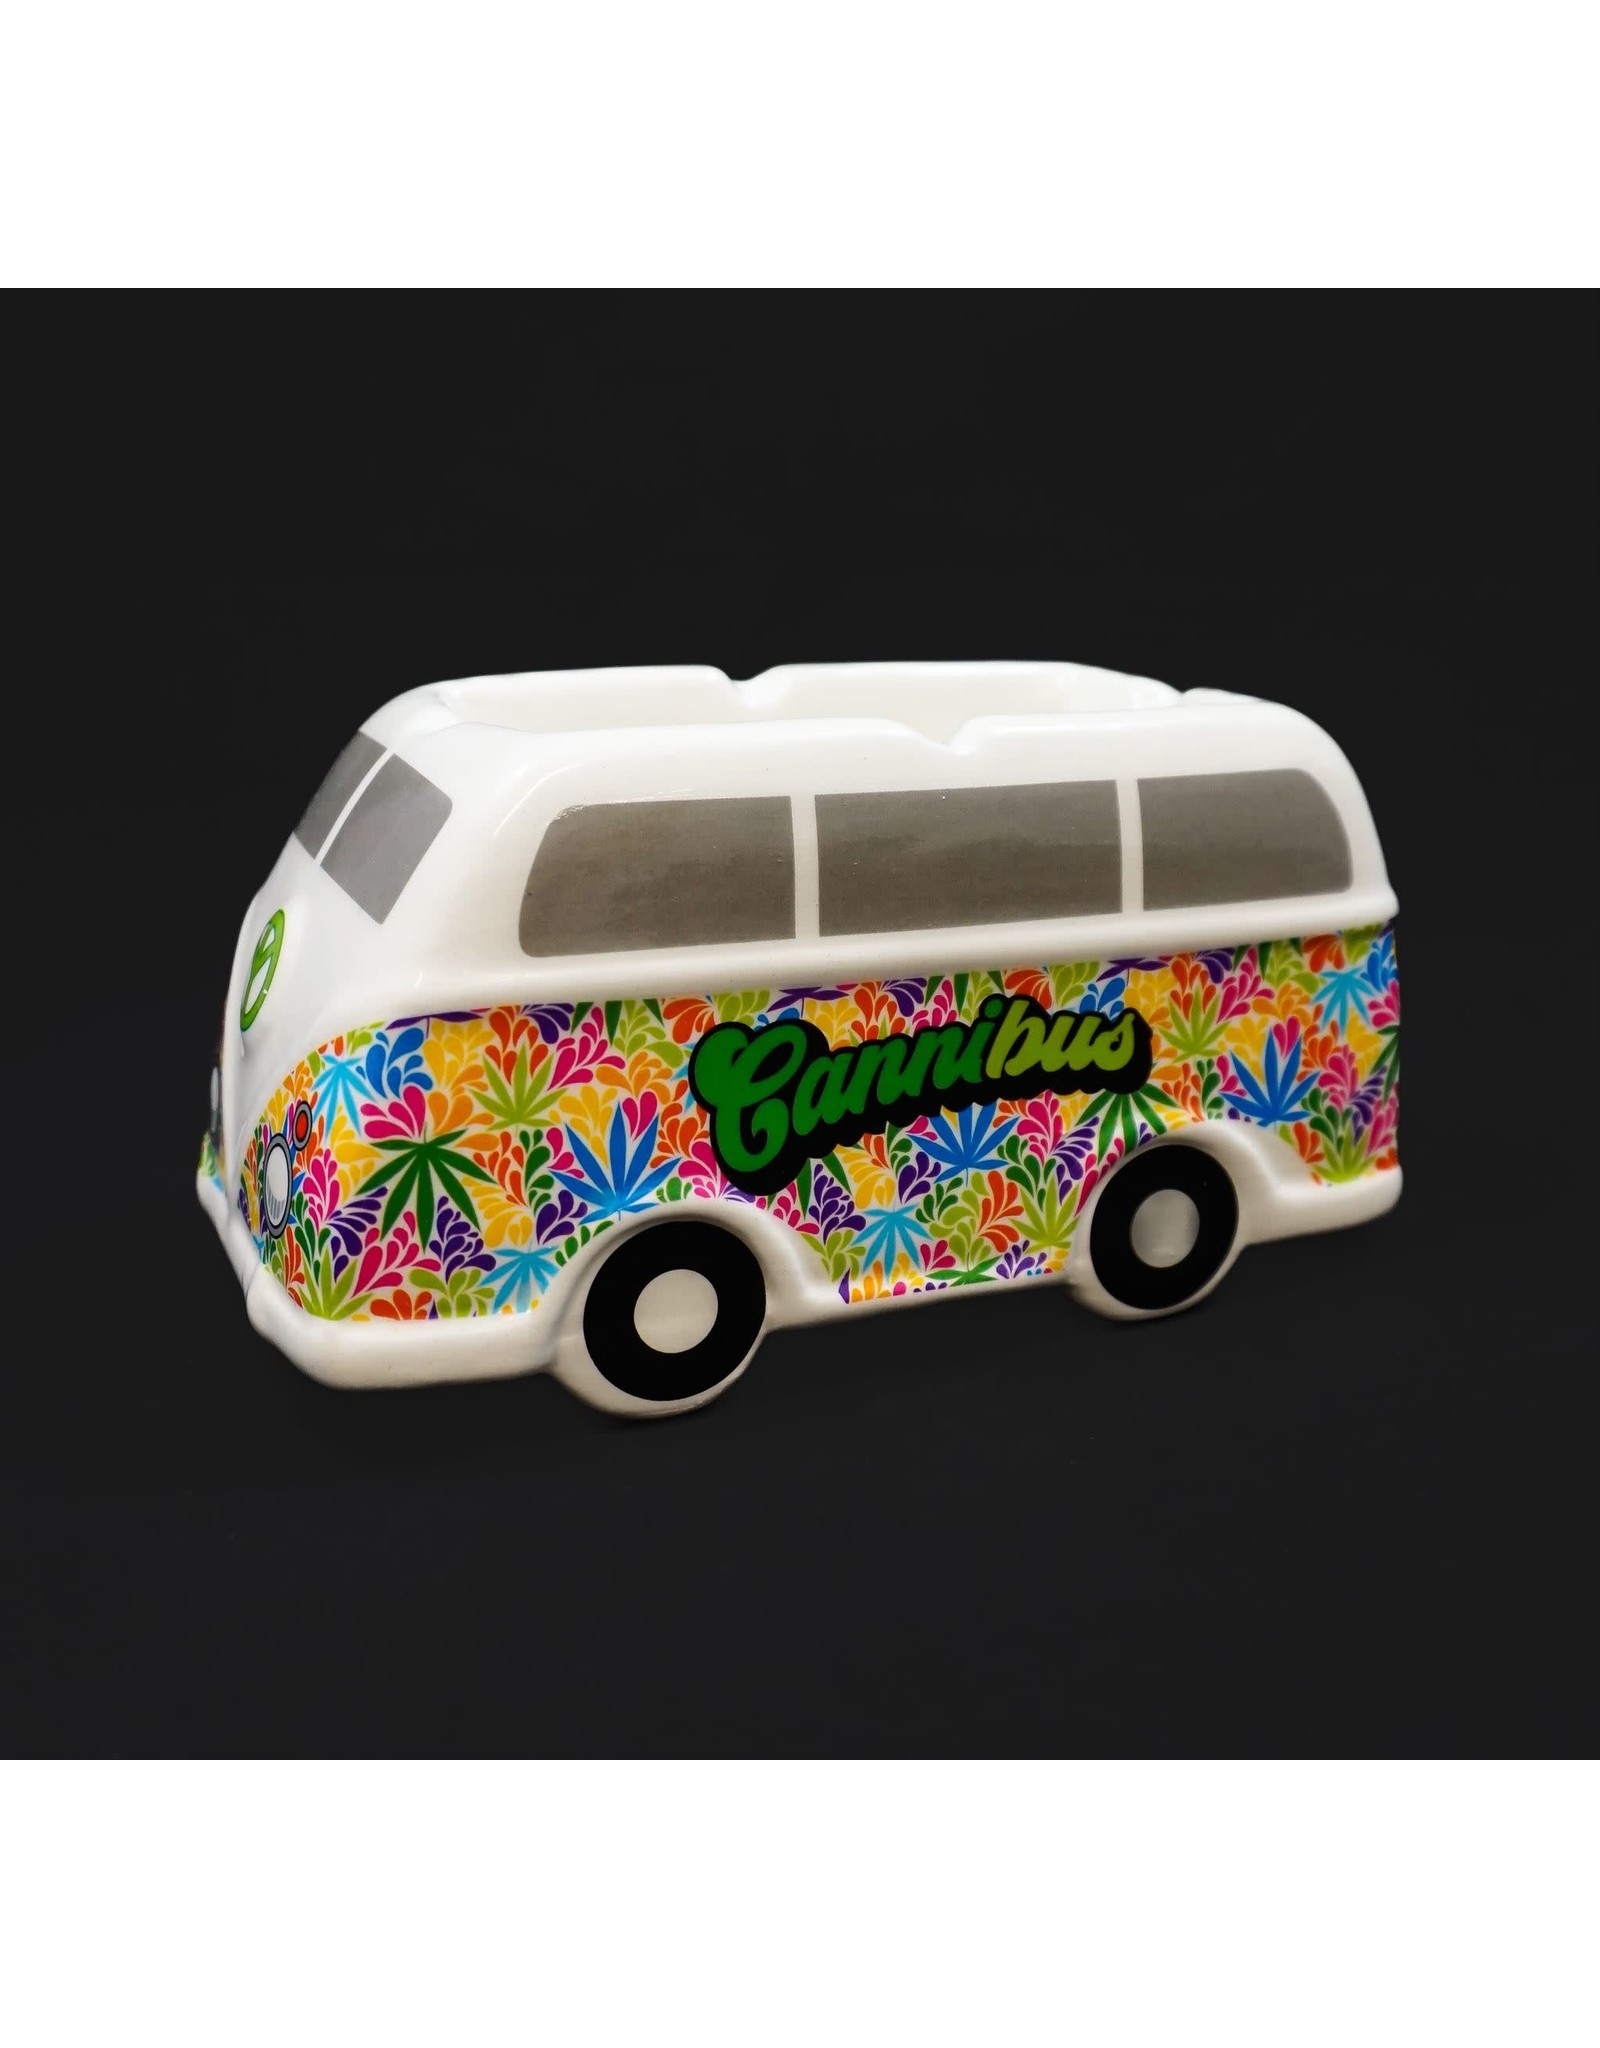 Fujima Fujima Hippie Bus Ceramic Ashtray - Tie-Dye